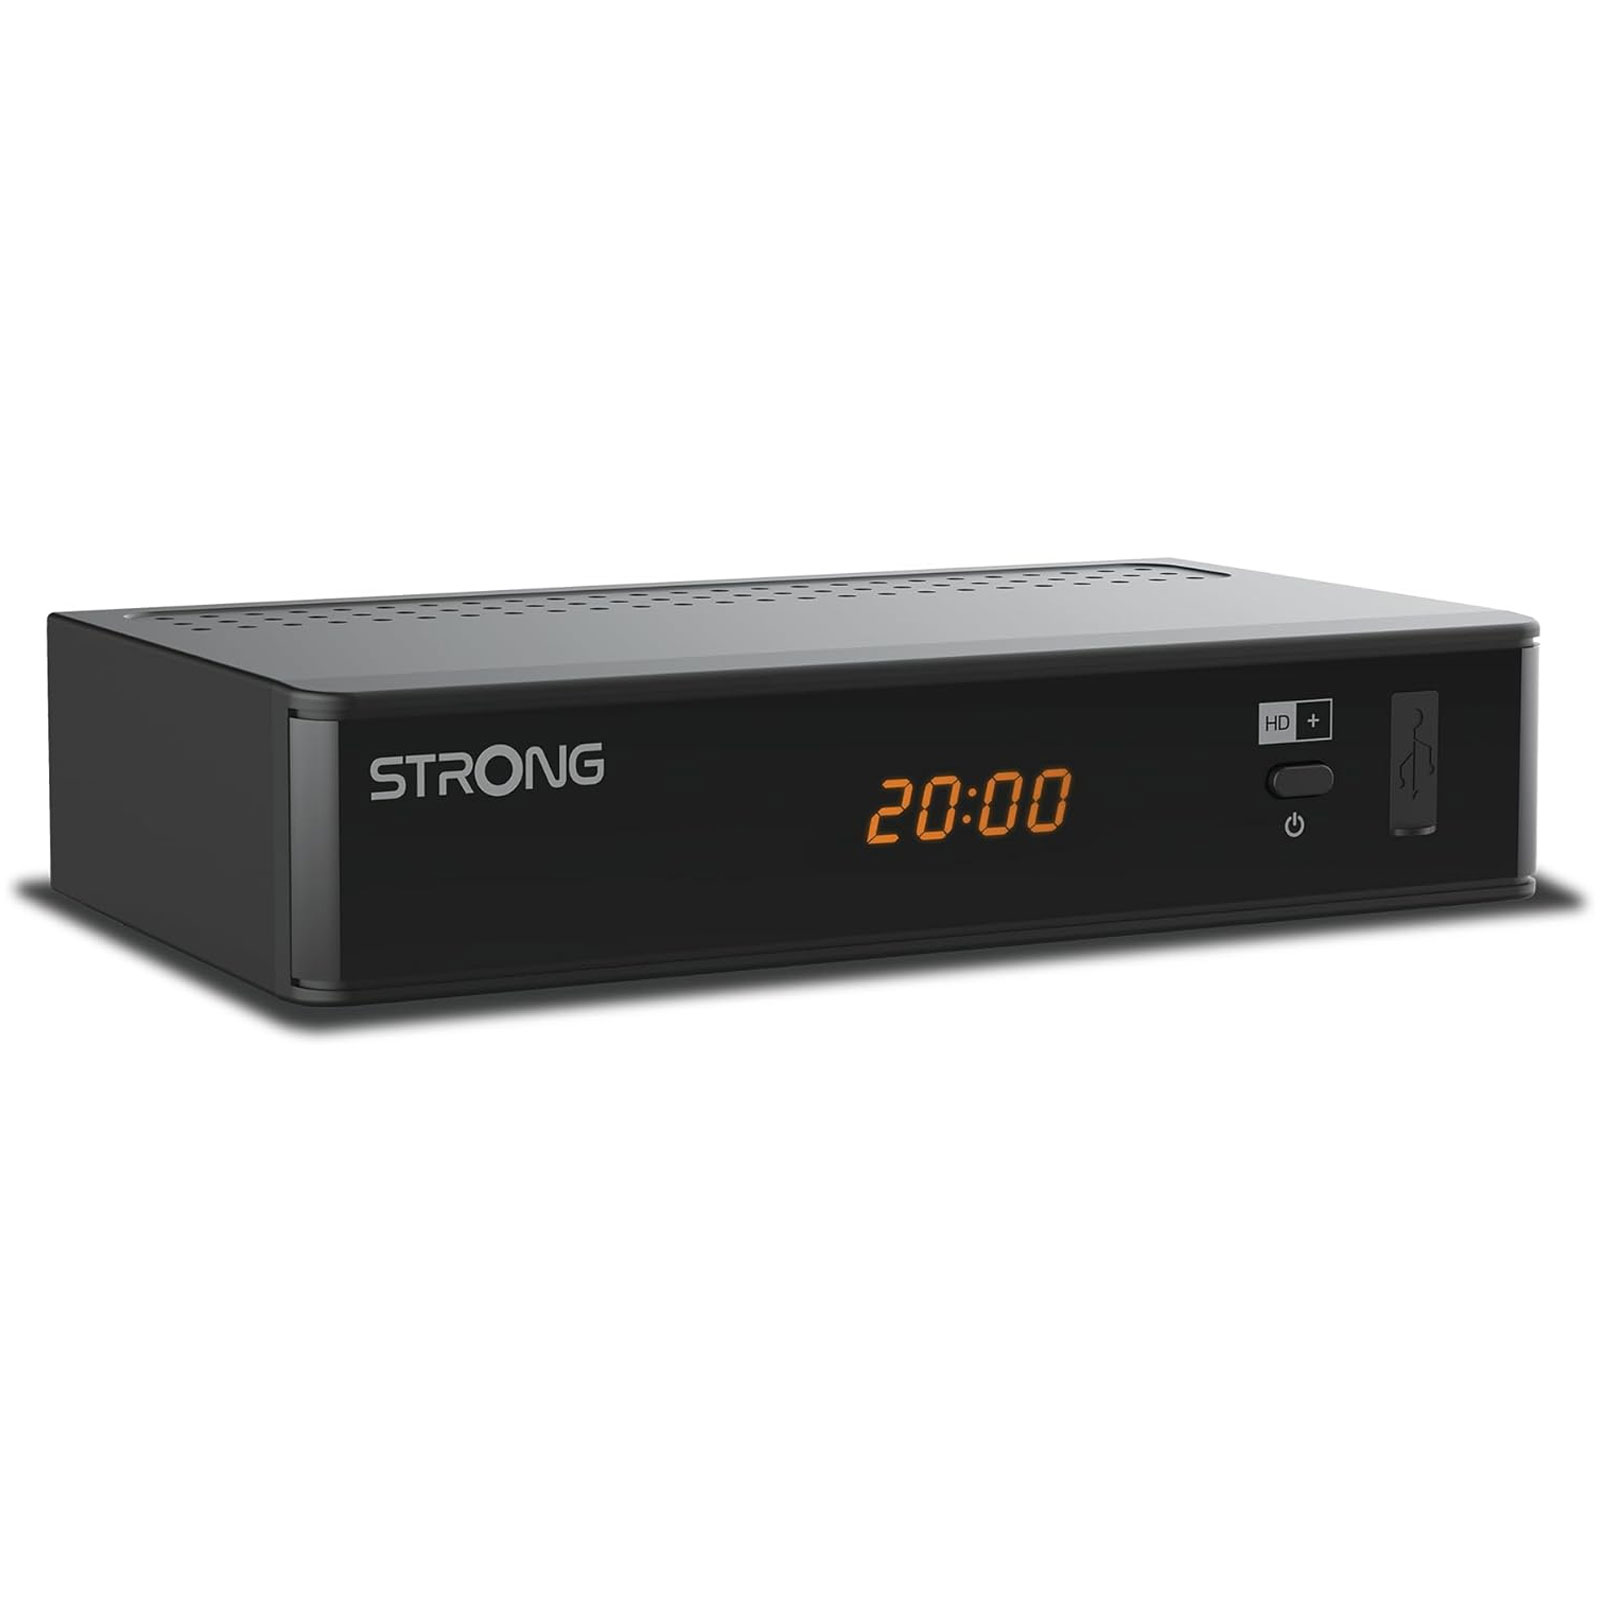 Strong SRT7815 DVB-S Receiver